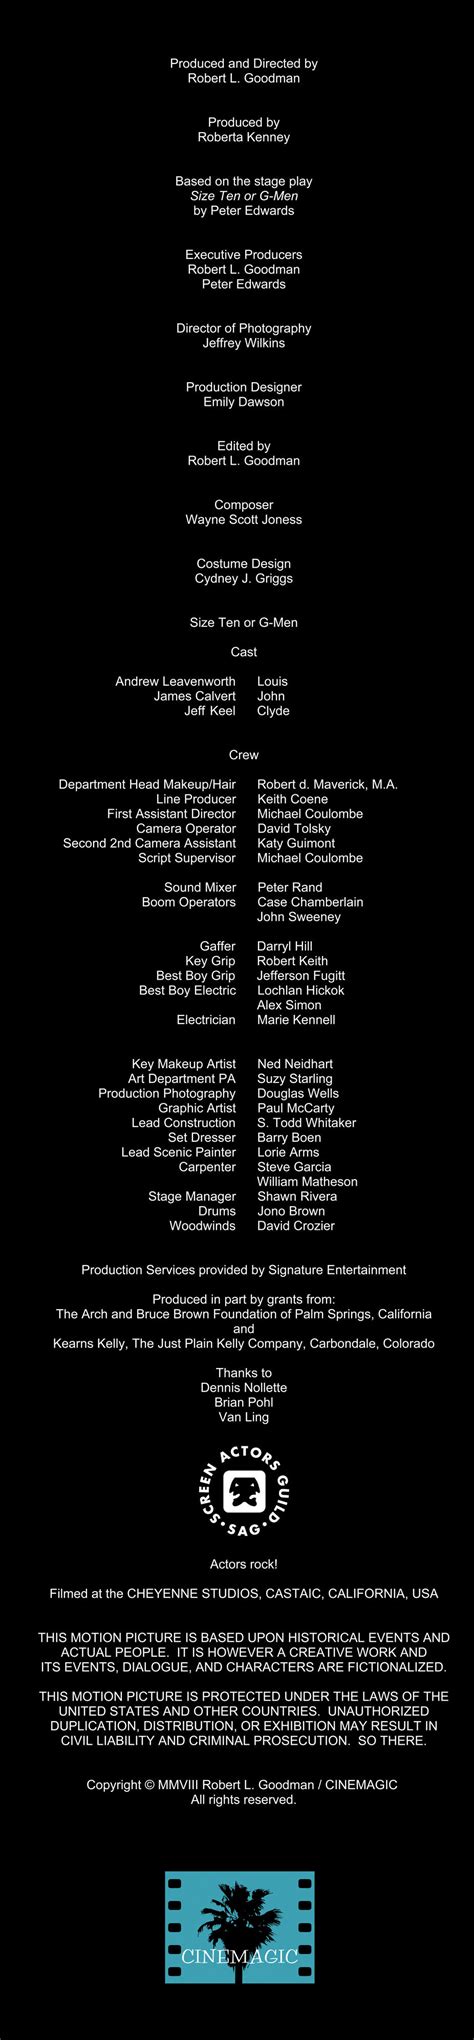 Poppin' lyrics credits, cast, crew of song